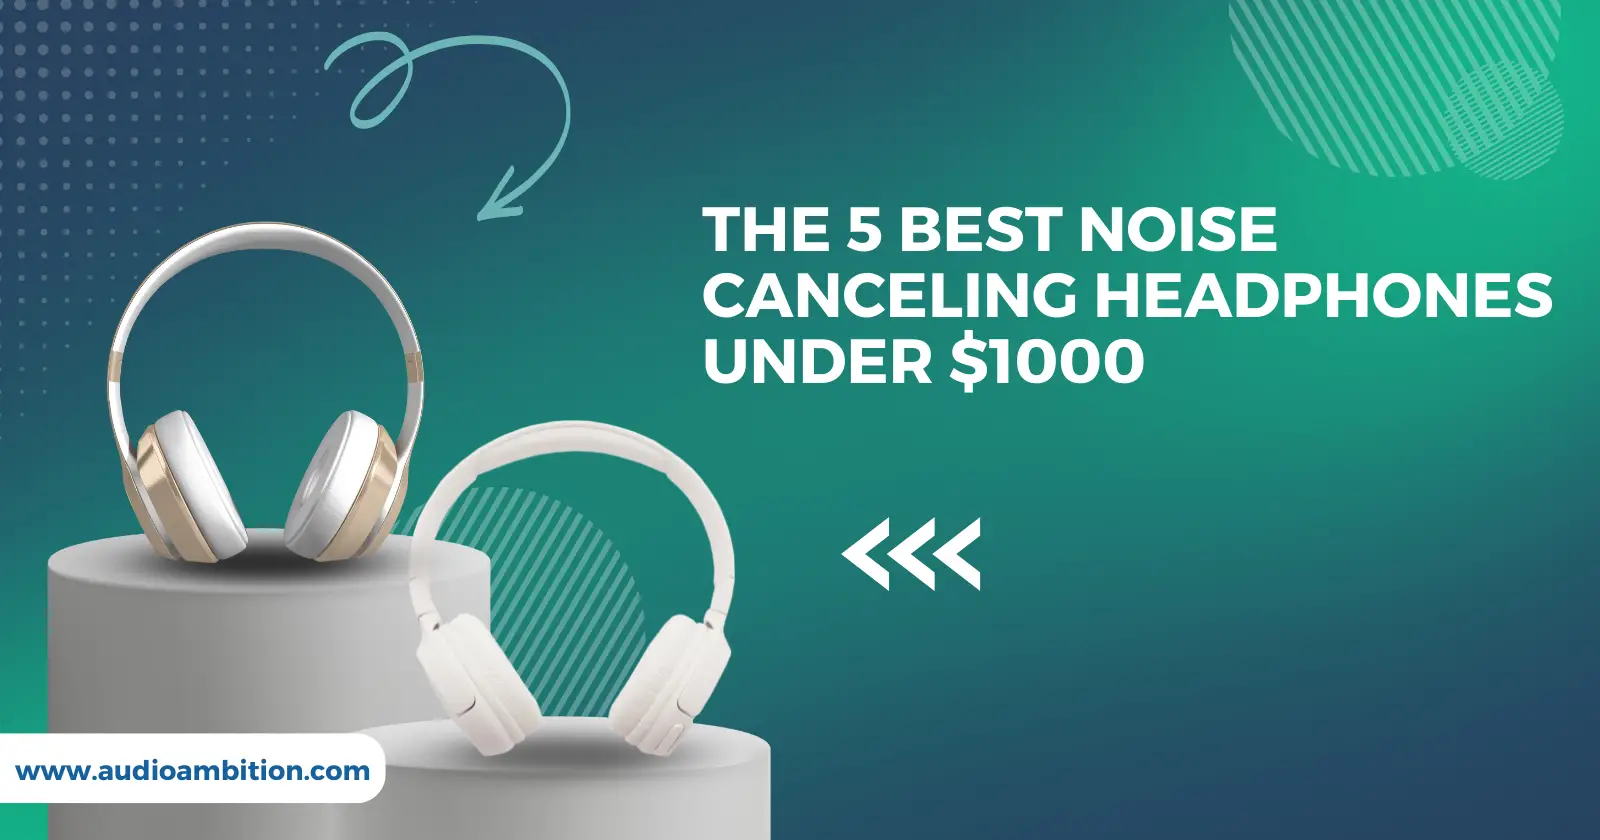 The 5 Best Noise Canceling Headphones Under $1000